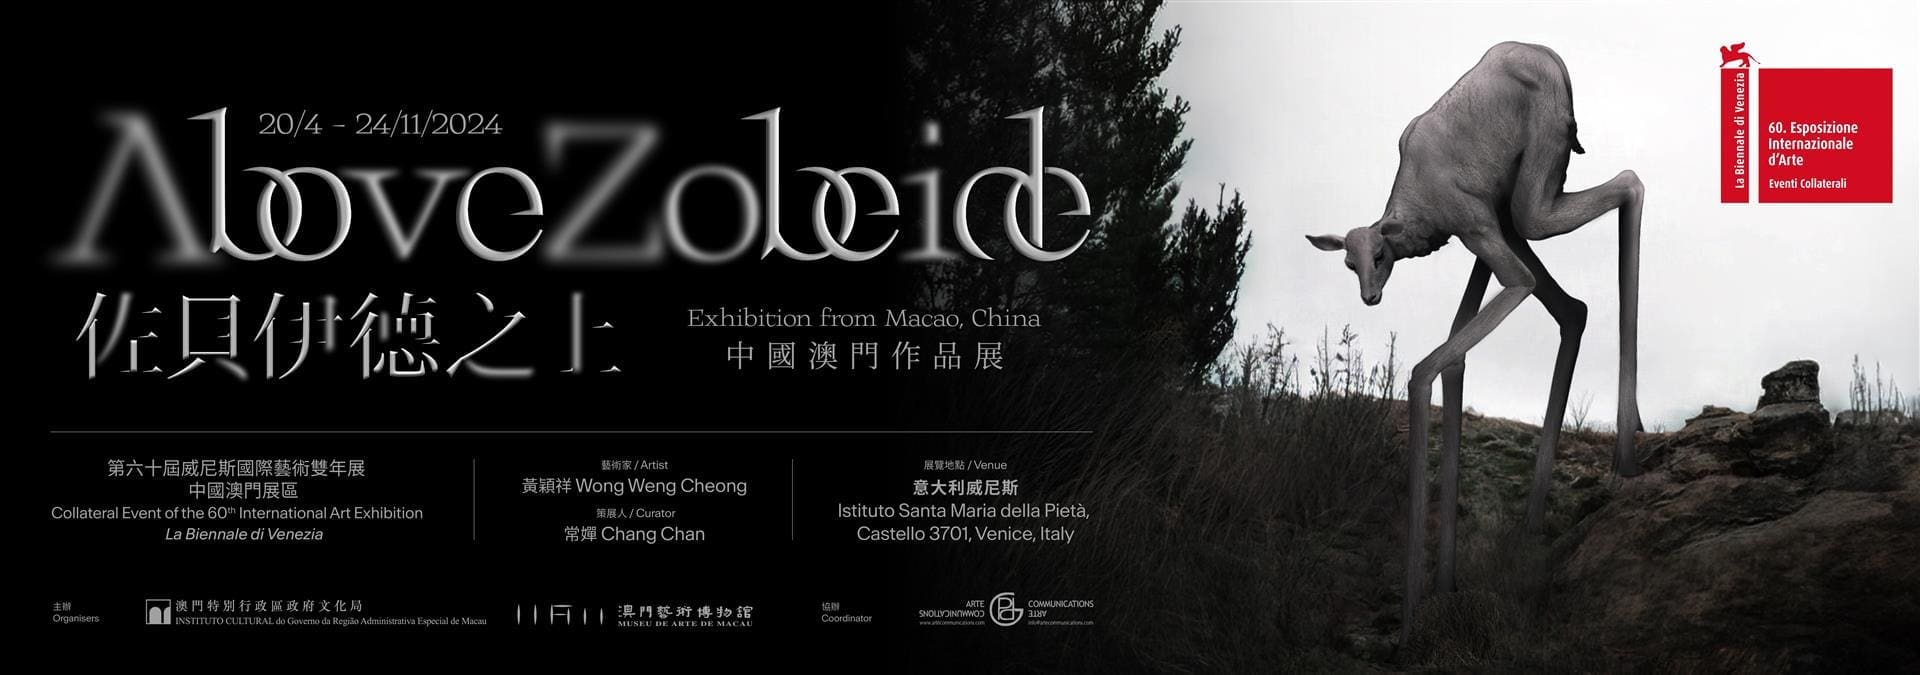 "Above Zobeide" Biennale Arte - Evento Collaterale:  Macao Museum of Art. presenta le opere di Wong Weng Cheong.